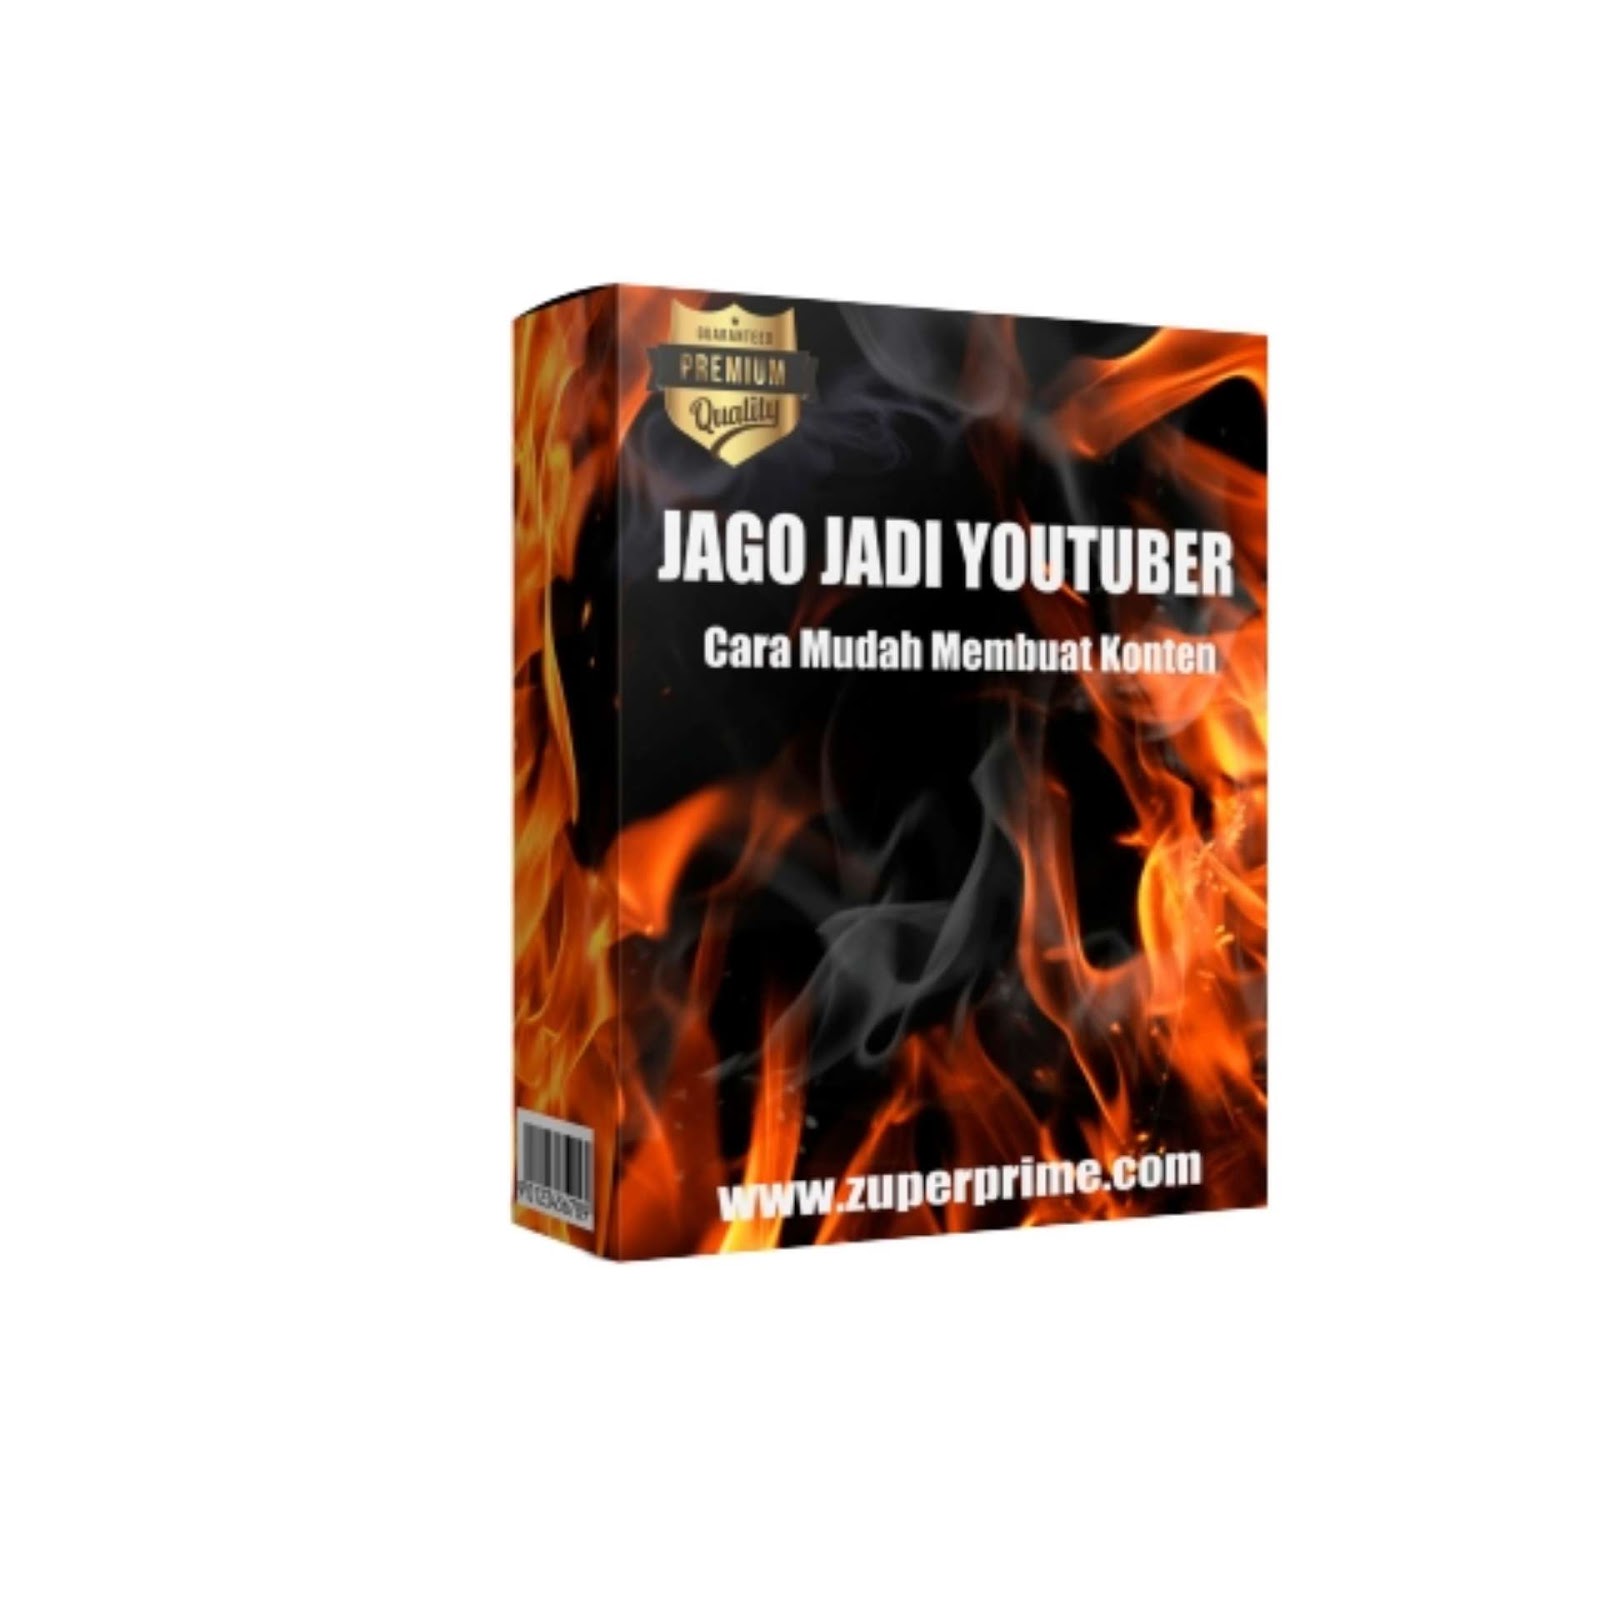 Jago Jadi YouTuber